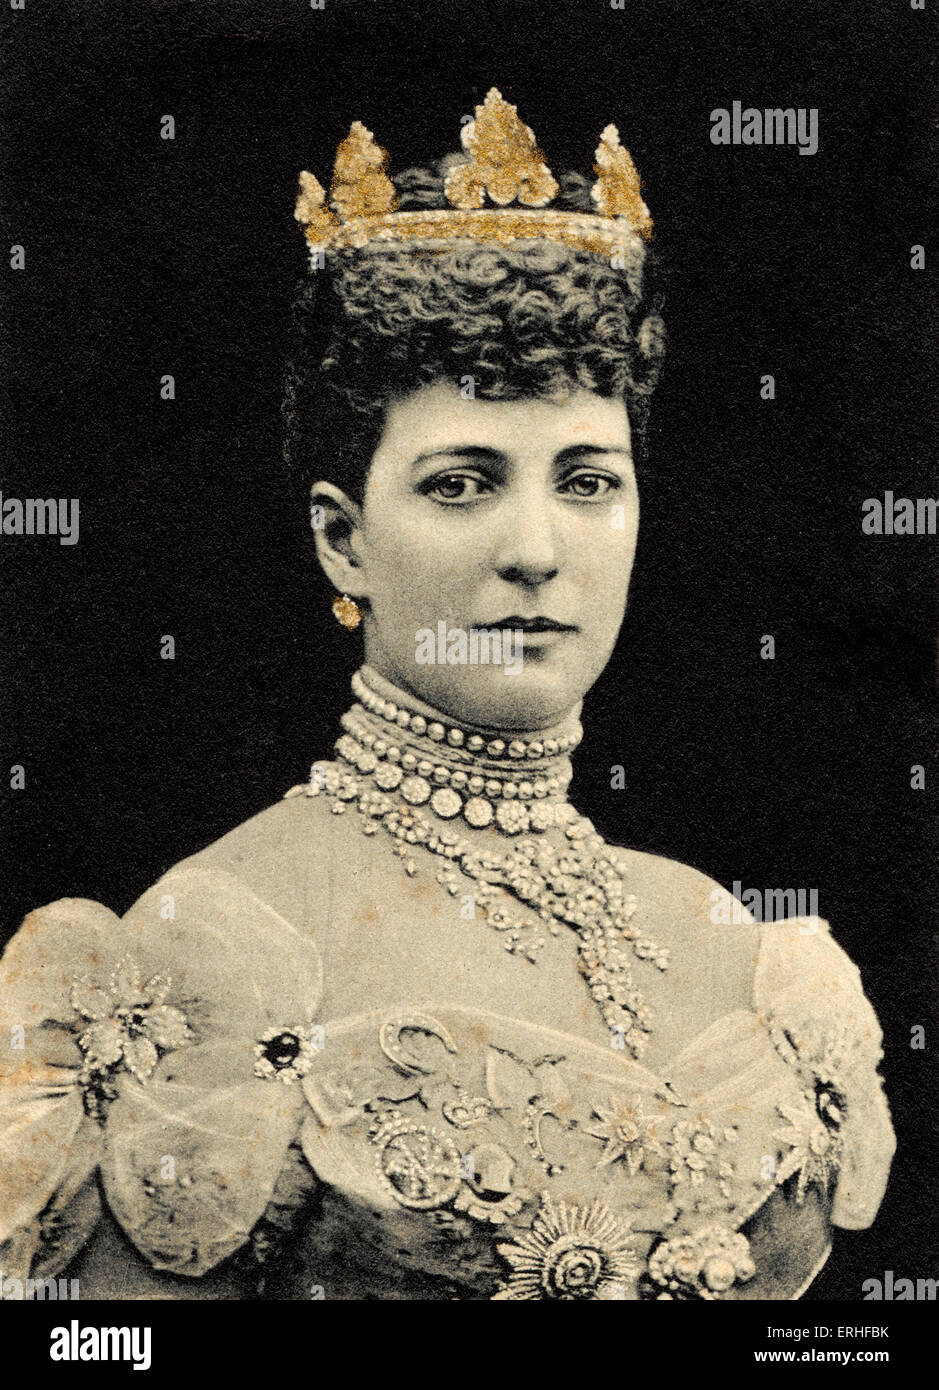 La Reina Alexandra de Dinamarca - Retrato - reina consorte del Rey Eduardo VII el 1 de diciembre de 1844 - 20 de noviembre de 1925 Foto de stock